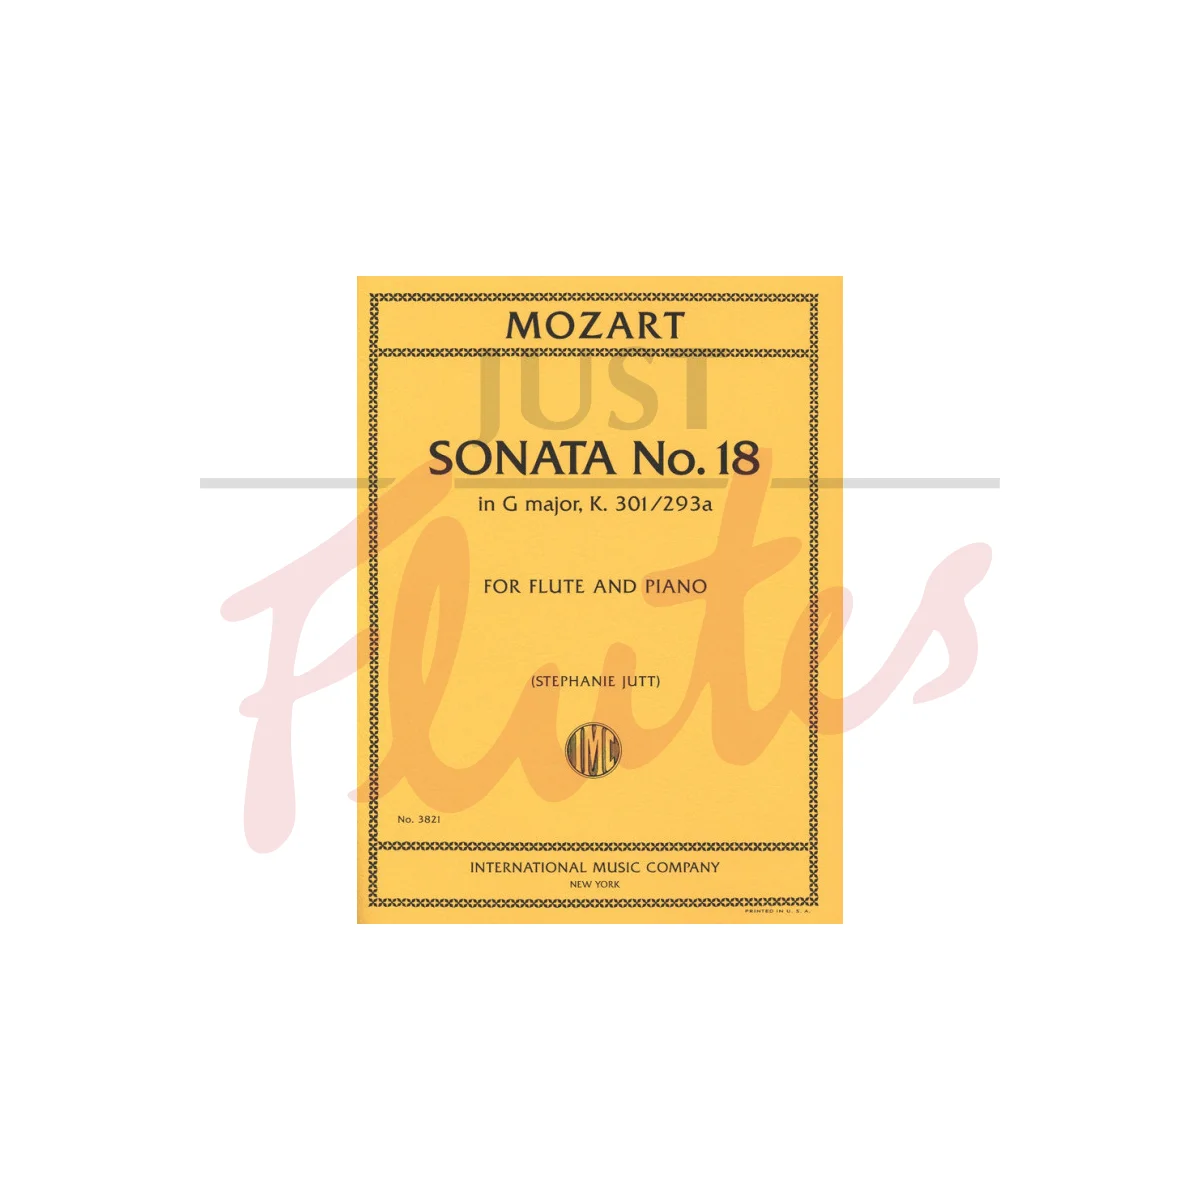 Sonata No. 18 in G major for Flute and Piano